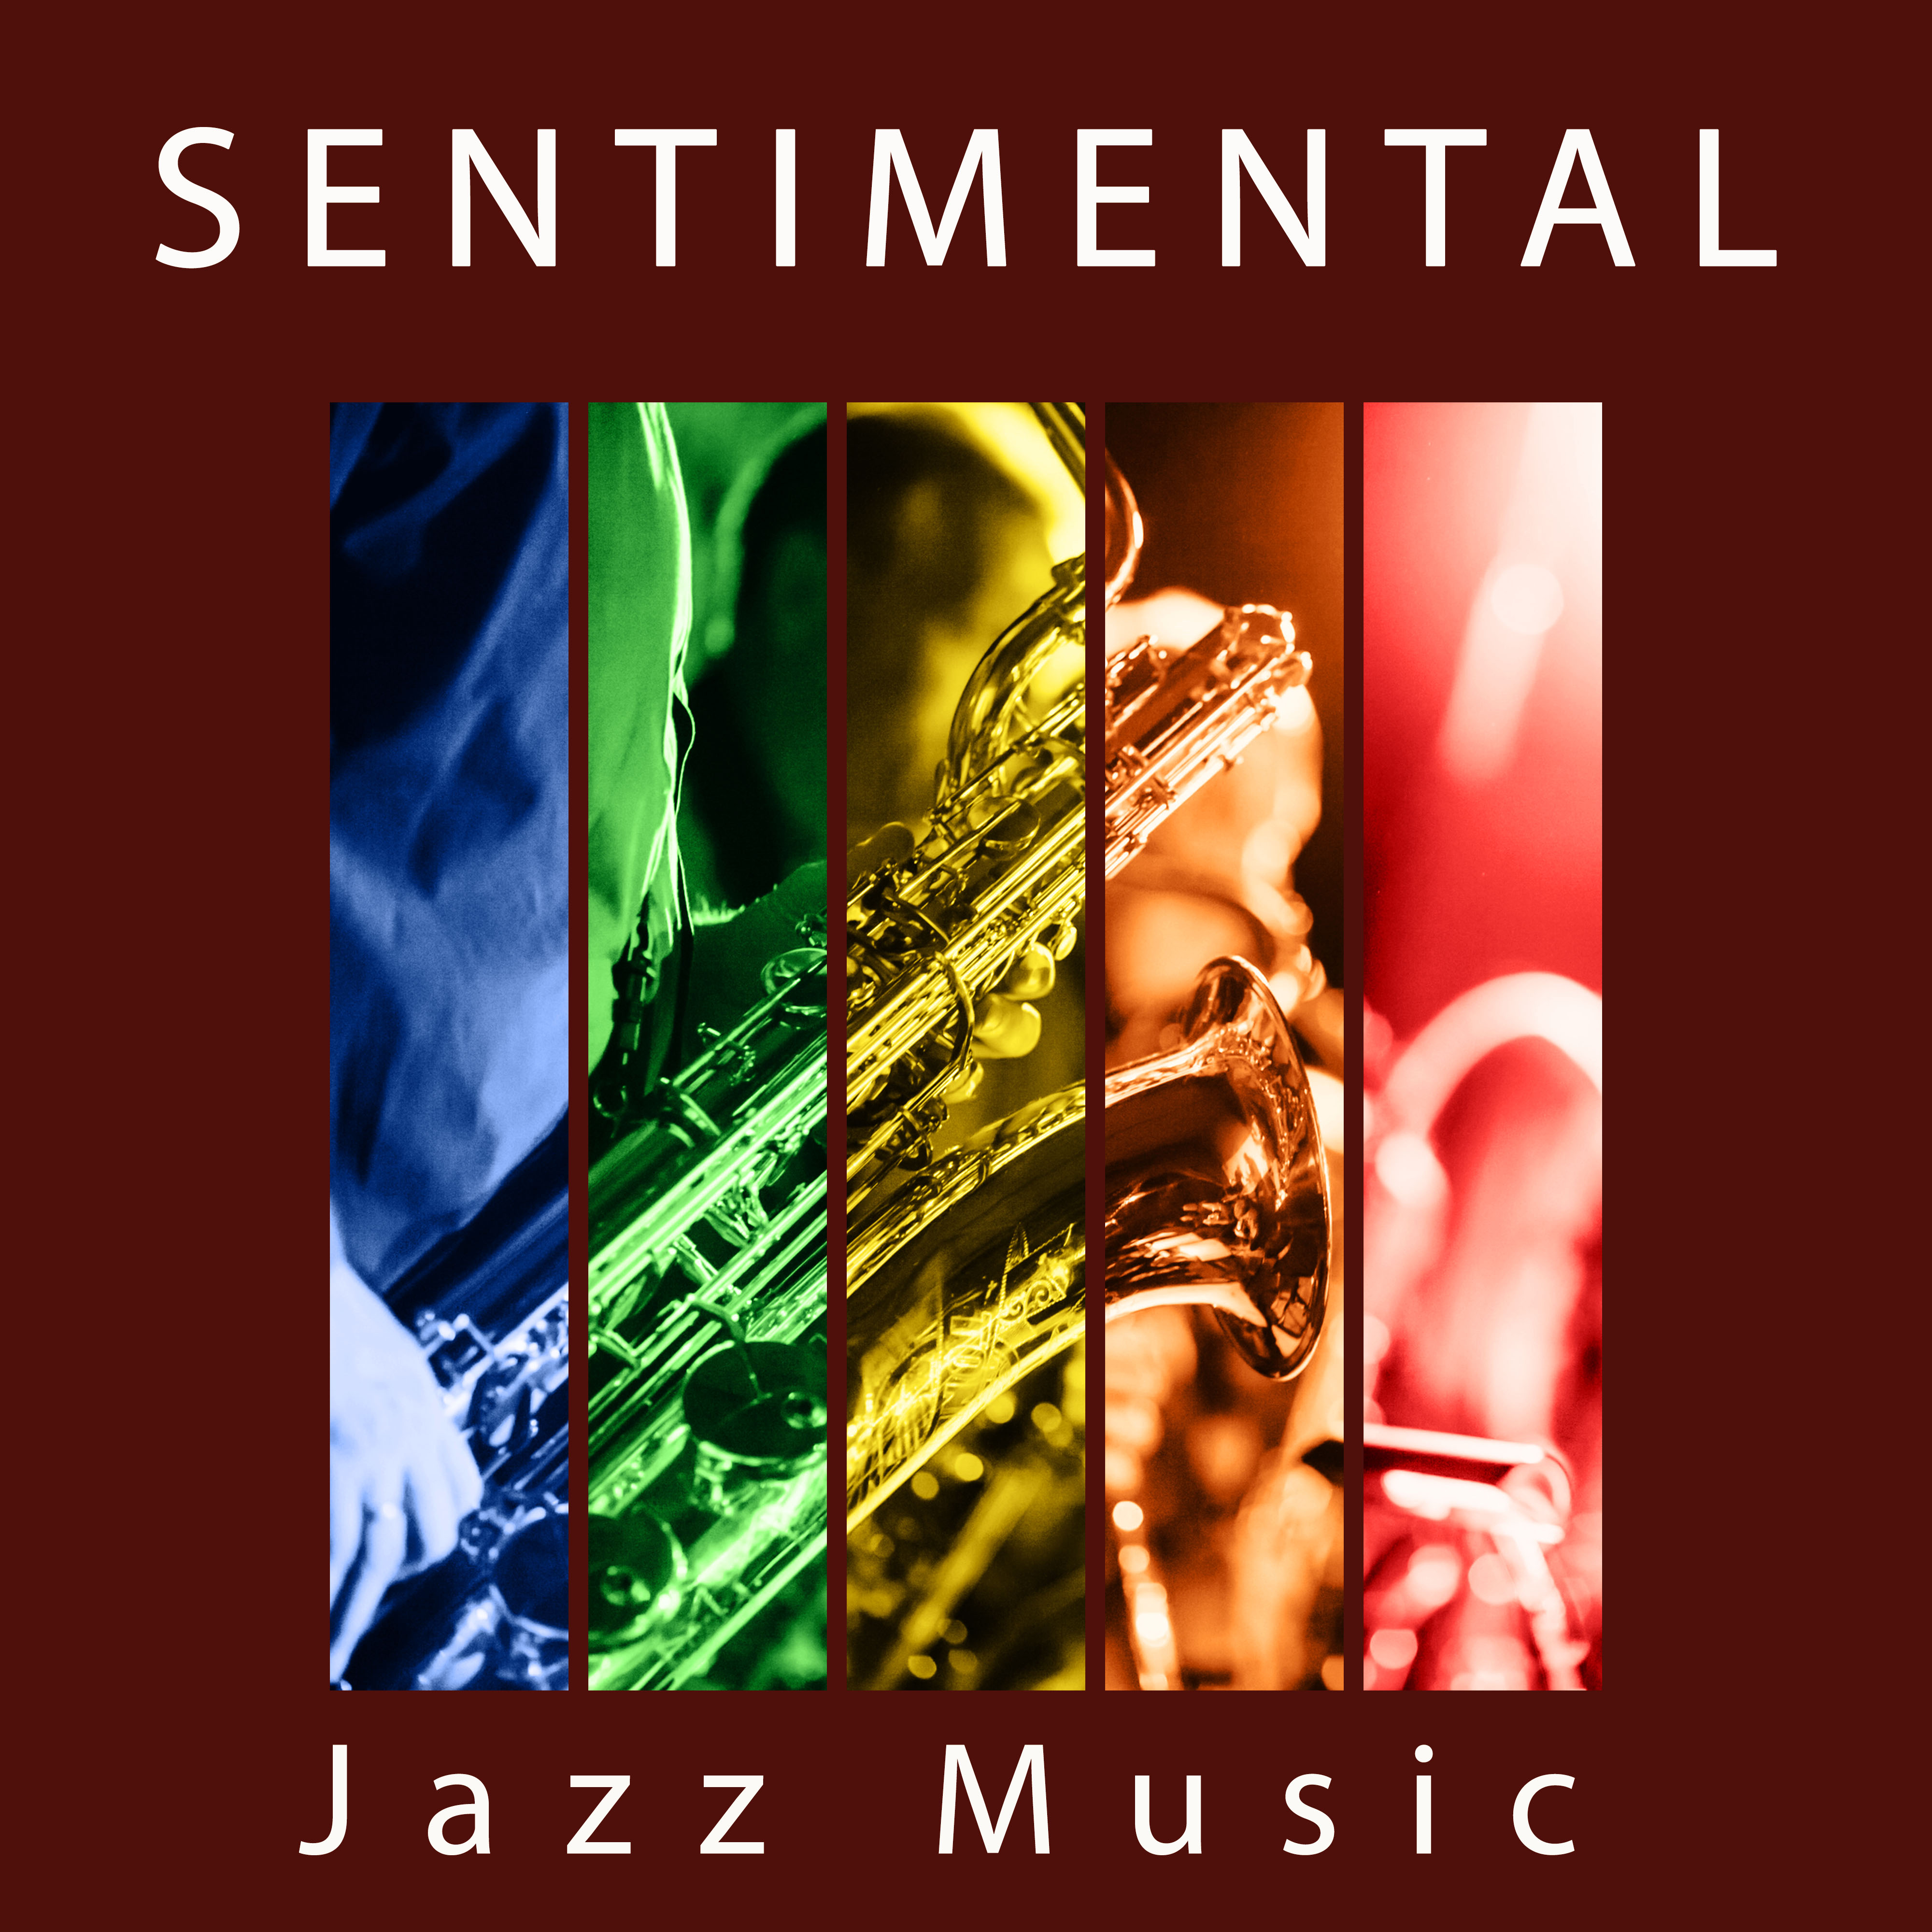 Sentimental Jazz Music – Romantic Music, Emotional Sounds of Jazz